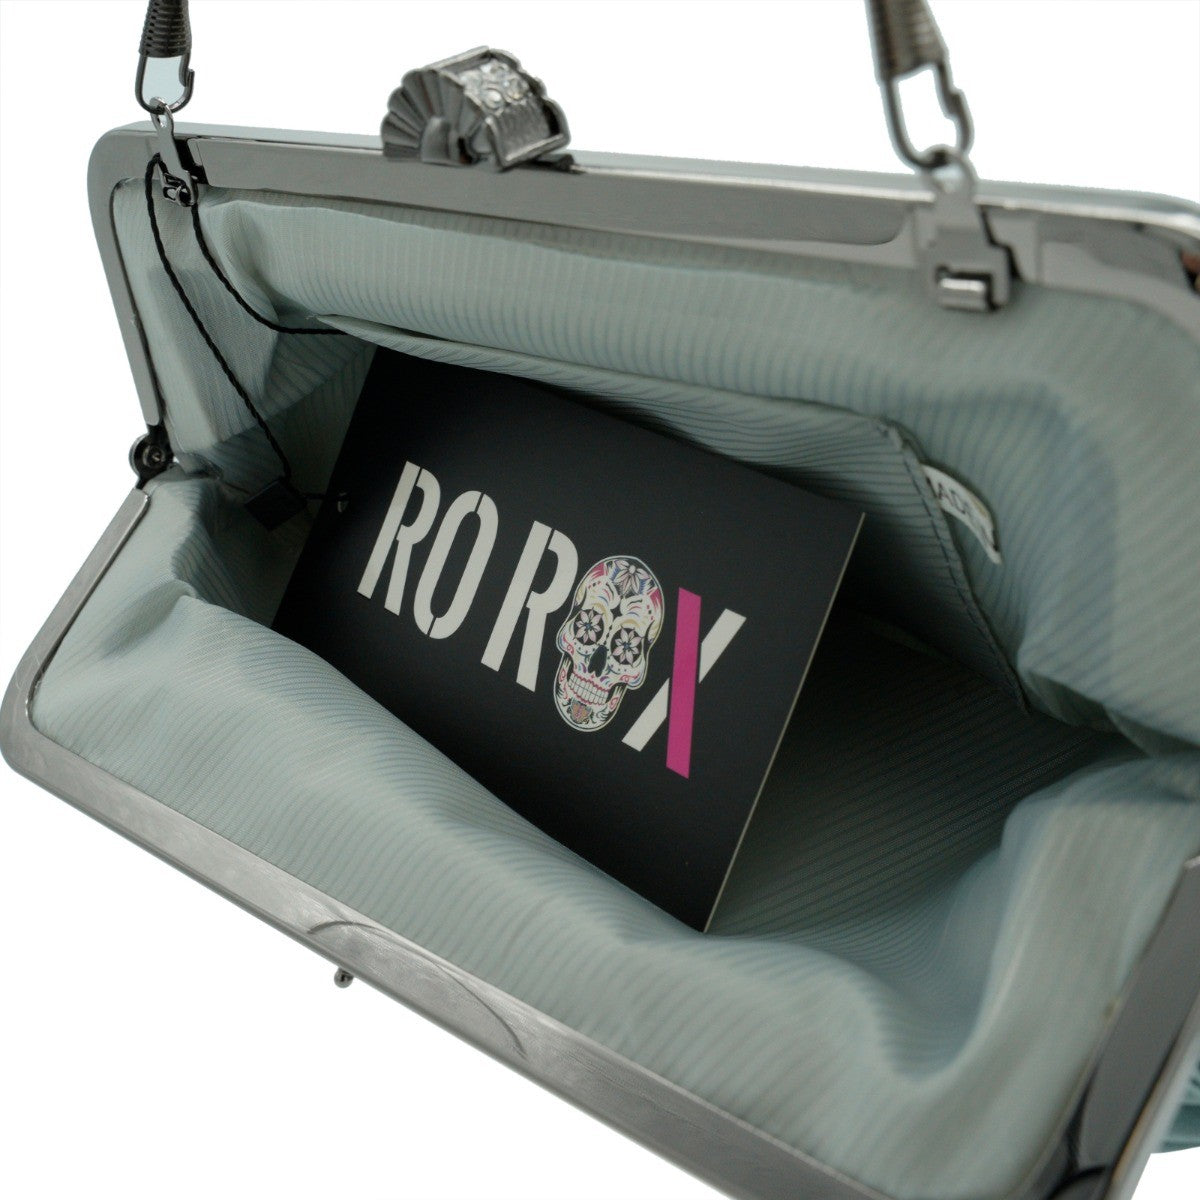 Ro Rox Lottie Satin Pleated Antique Clasp Clutch Evening Bag